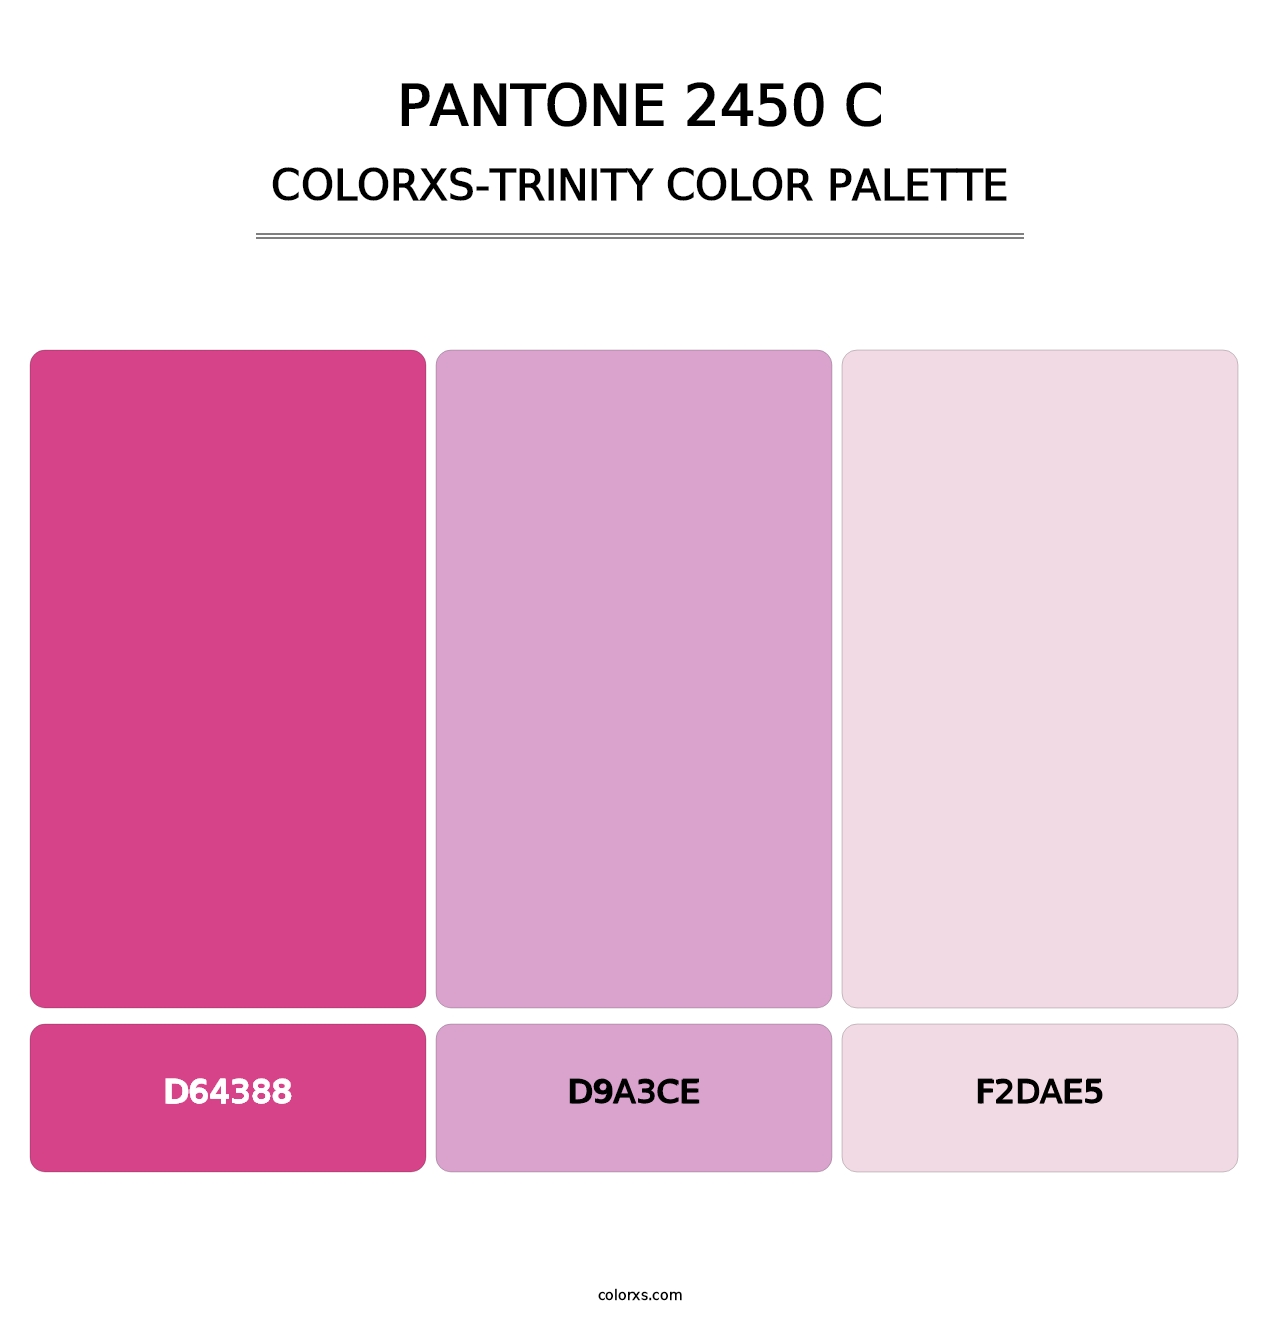 PANTONE 2450 C - Colorxs Trinity Palette